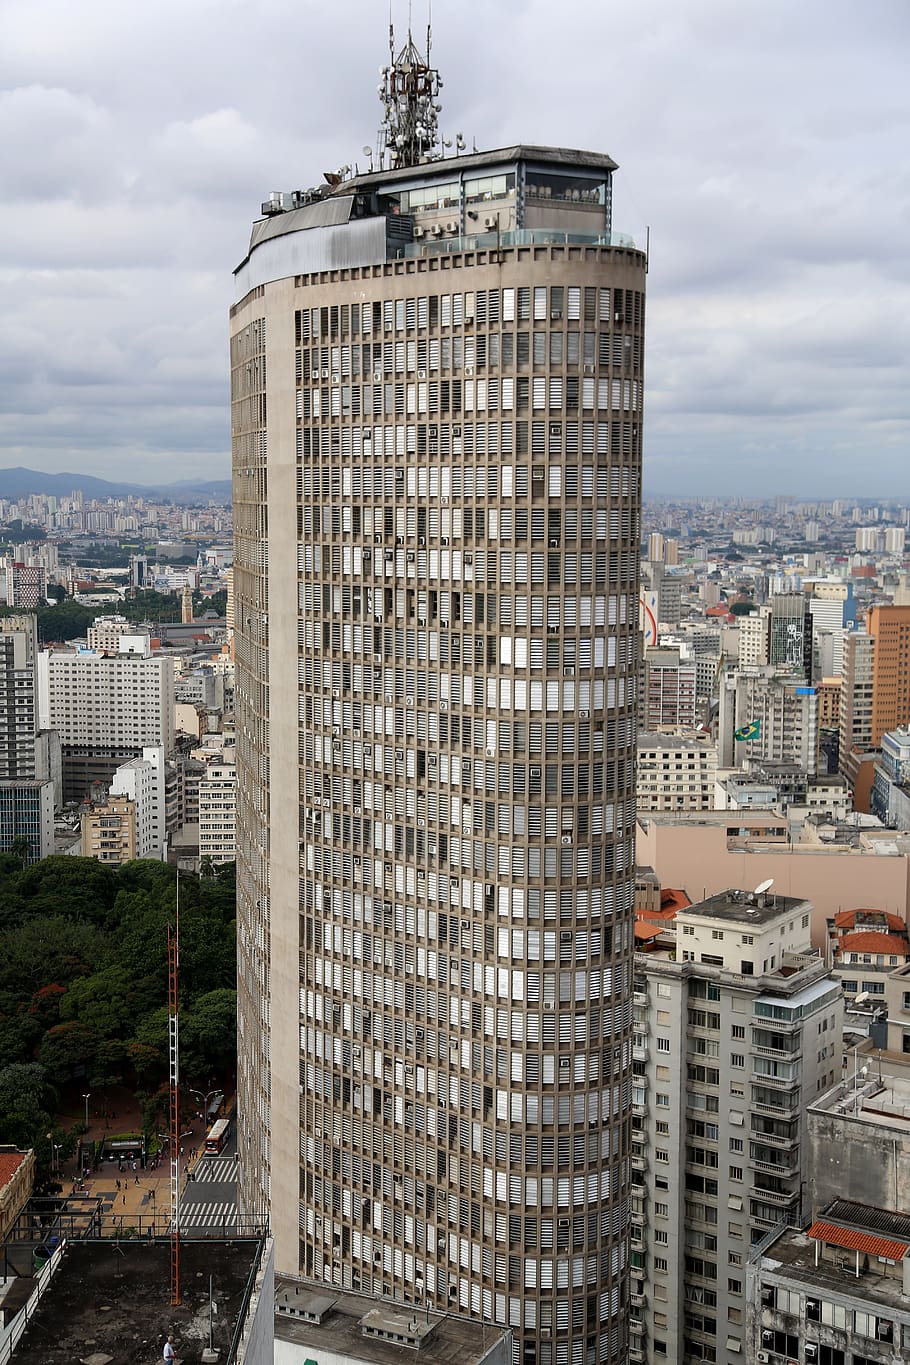 italy building, center, architecture, blue sky, tall building, building, highest sao paulo, brazil, vista, downtown são paulo